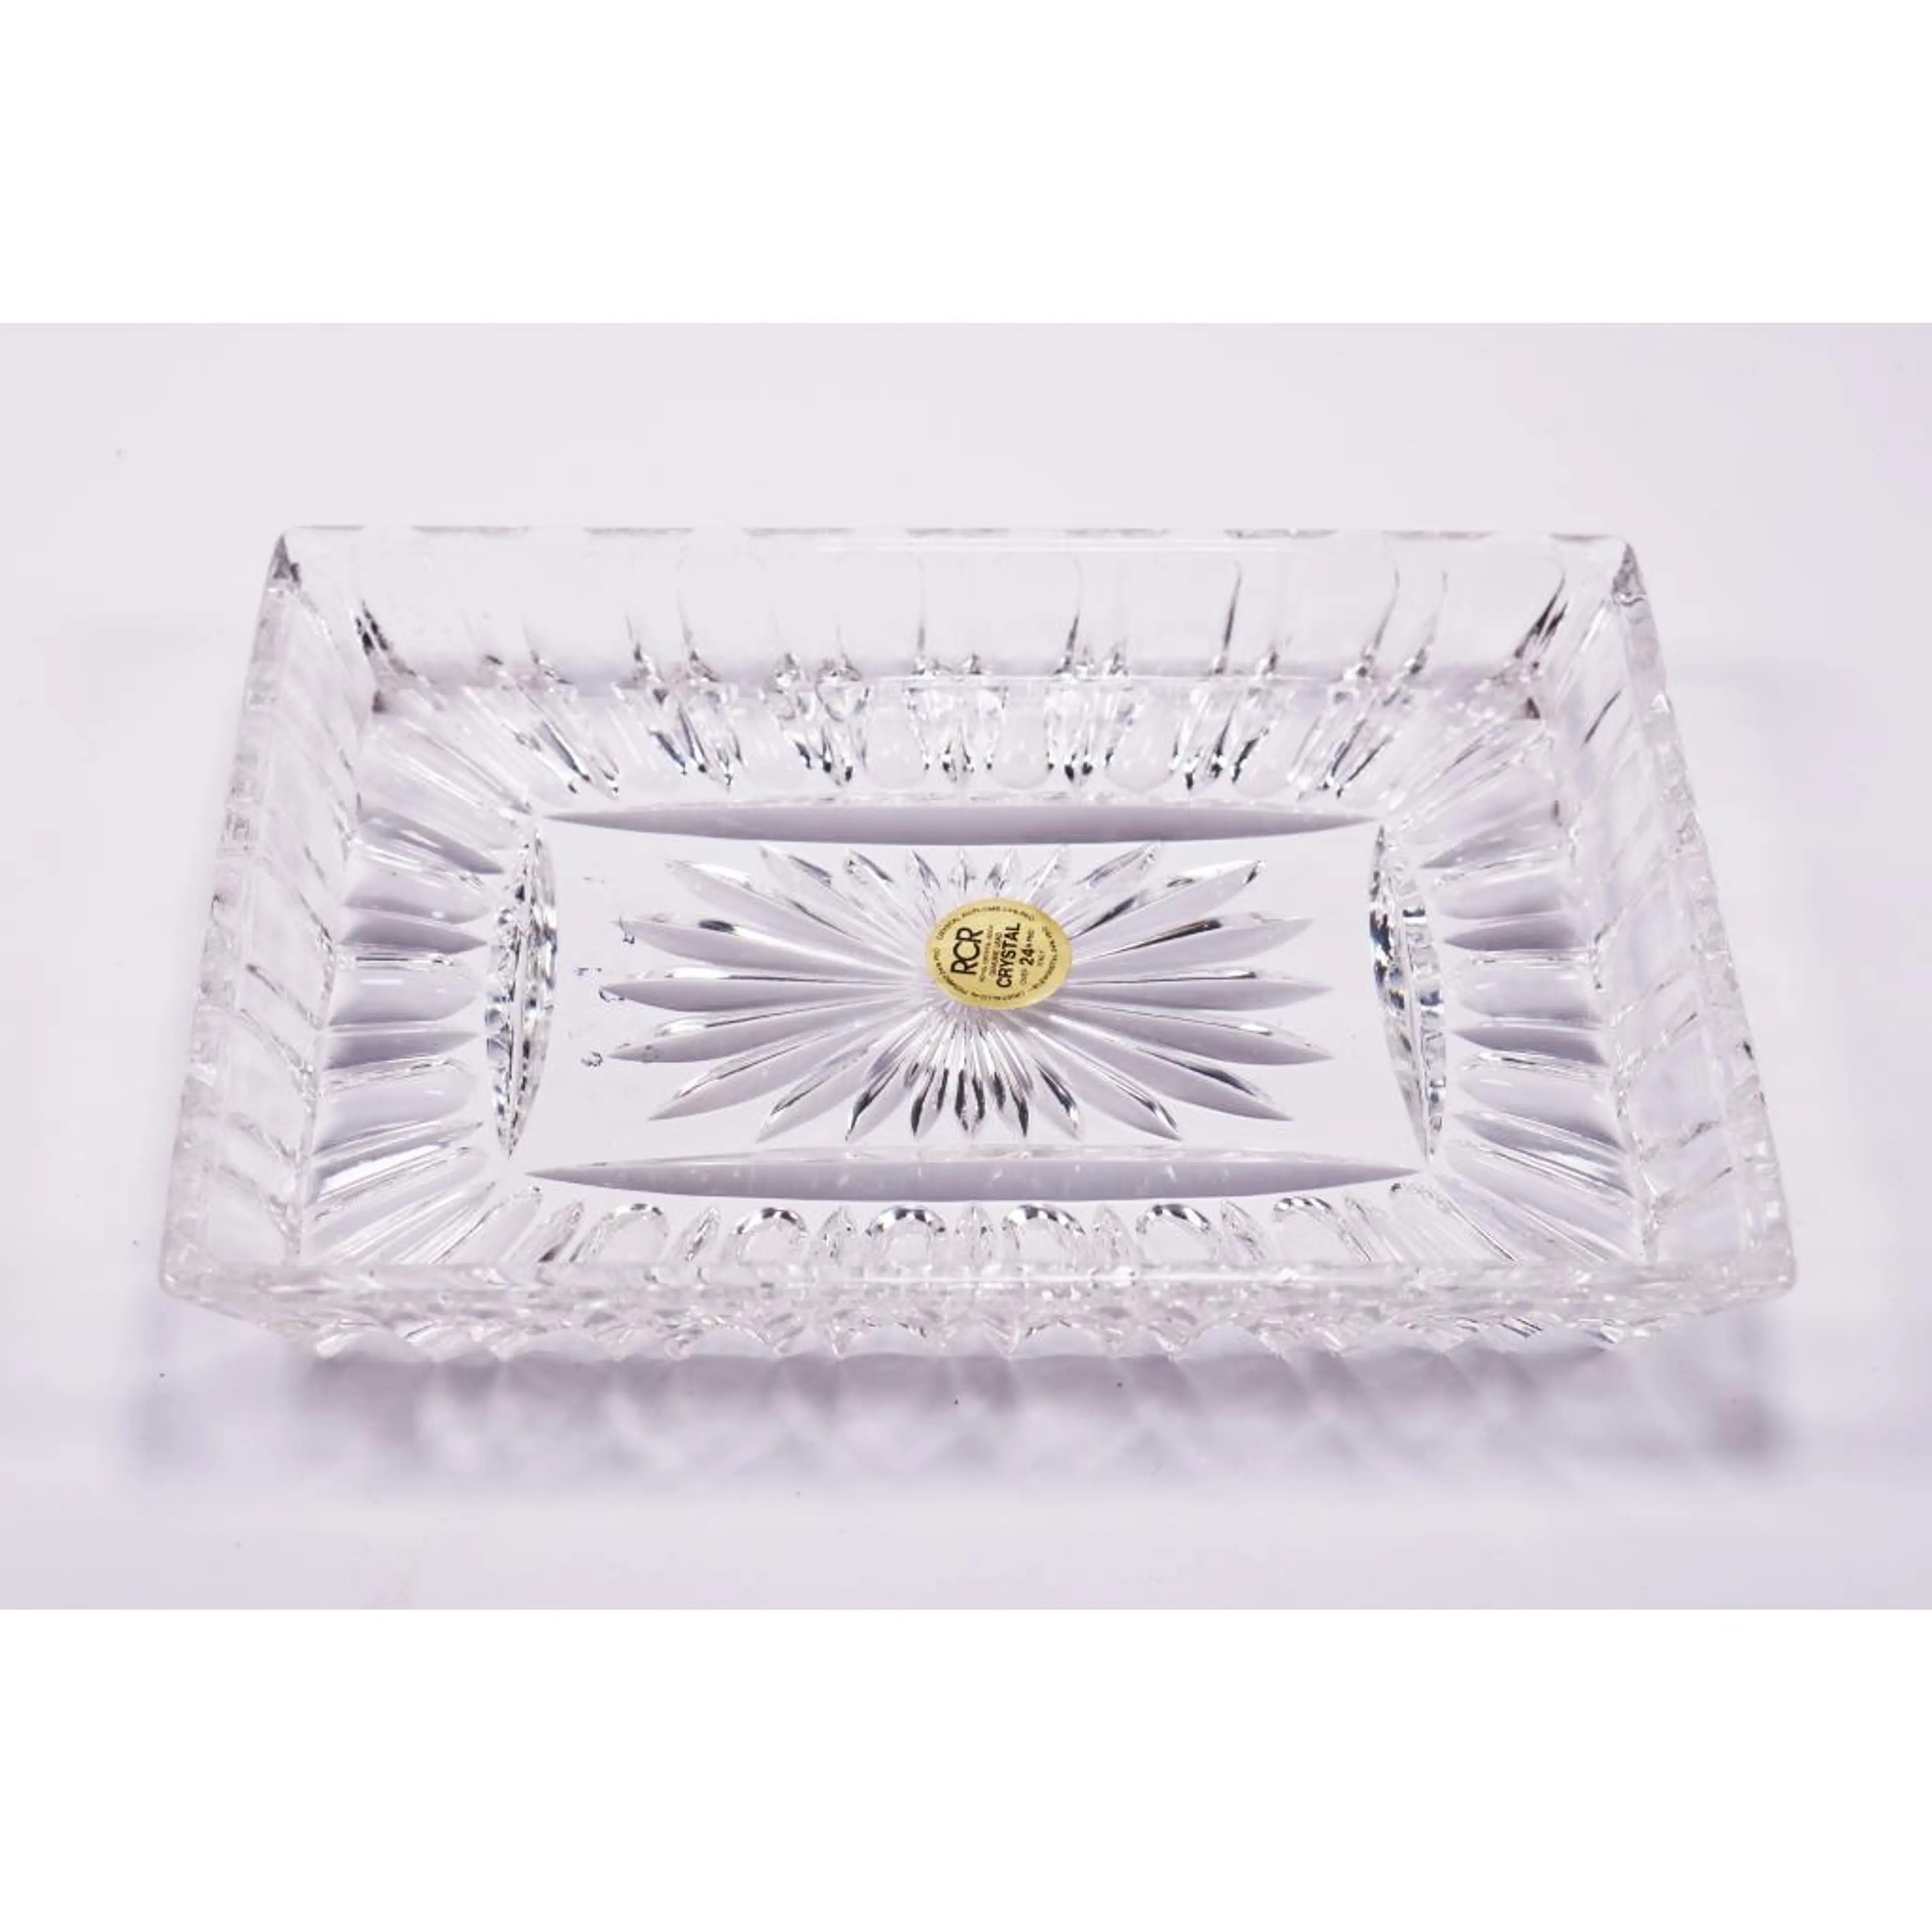 Small Beautiful Vintage Crystal Plate, Crystal Cake Plate